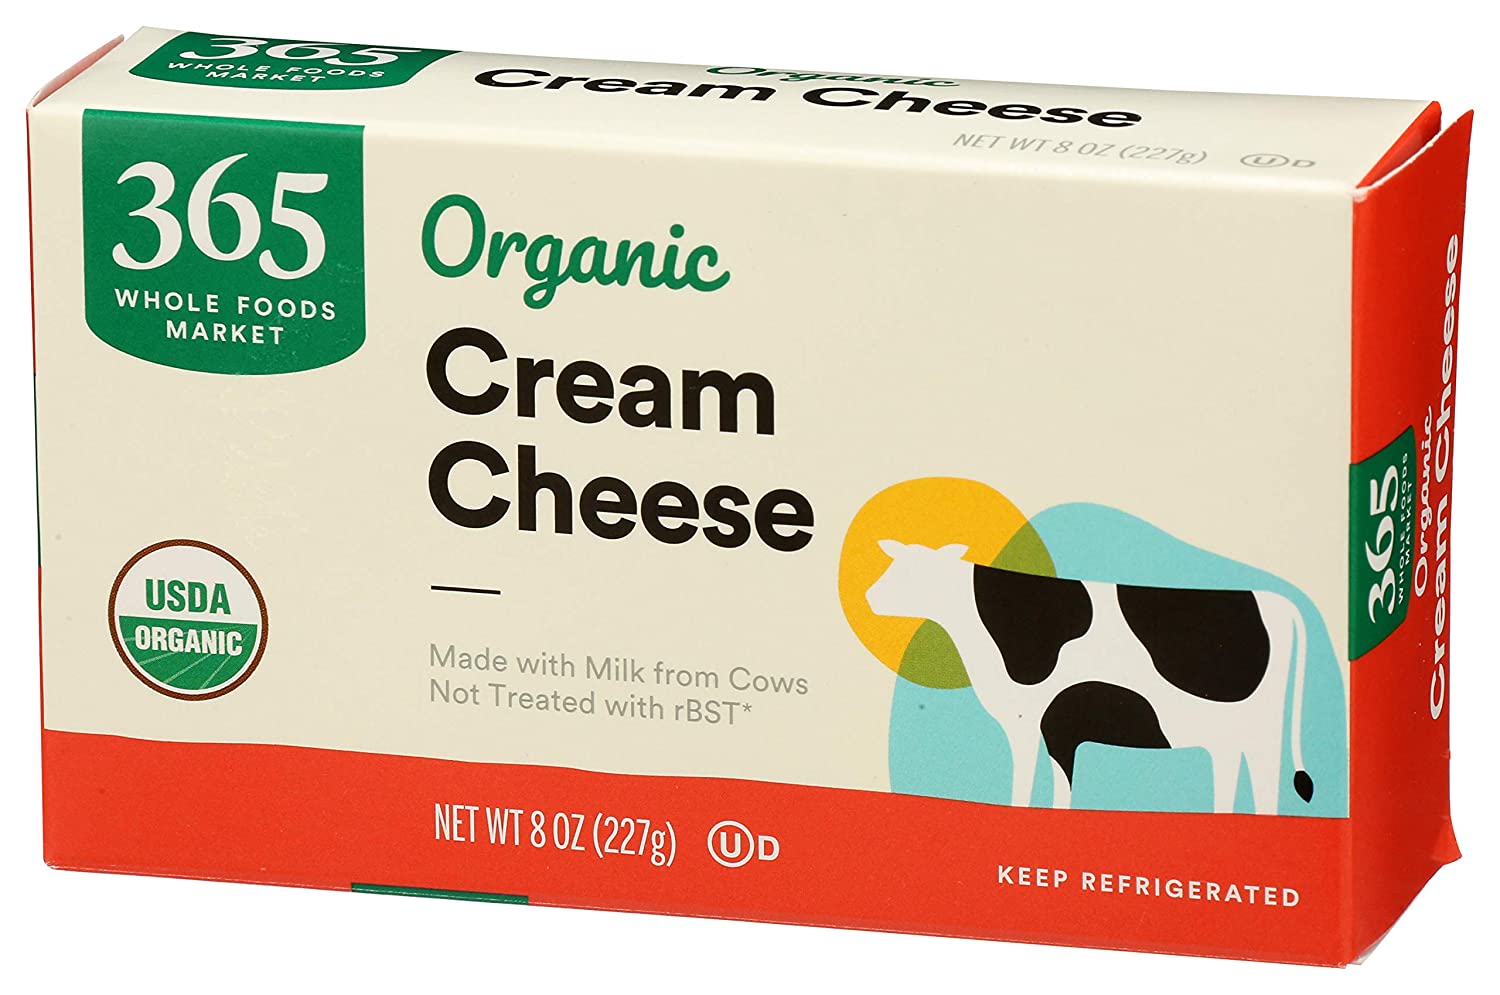 PHÔ MAI CREAM CHEESE HỮU CƠ USDA Organic THƯỜNG 365 by Whole Foods Market,